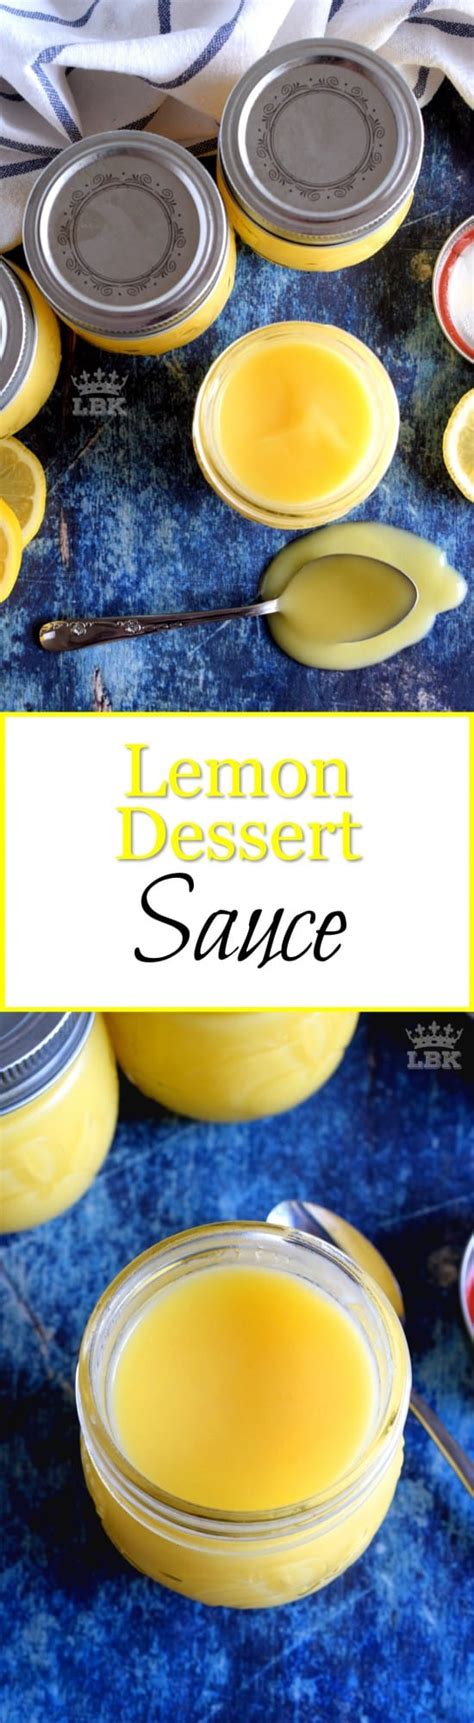 Lemon Dessert Sauce Lord Byrons Kitchen